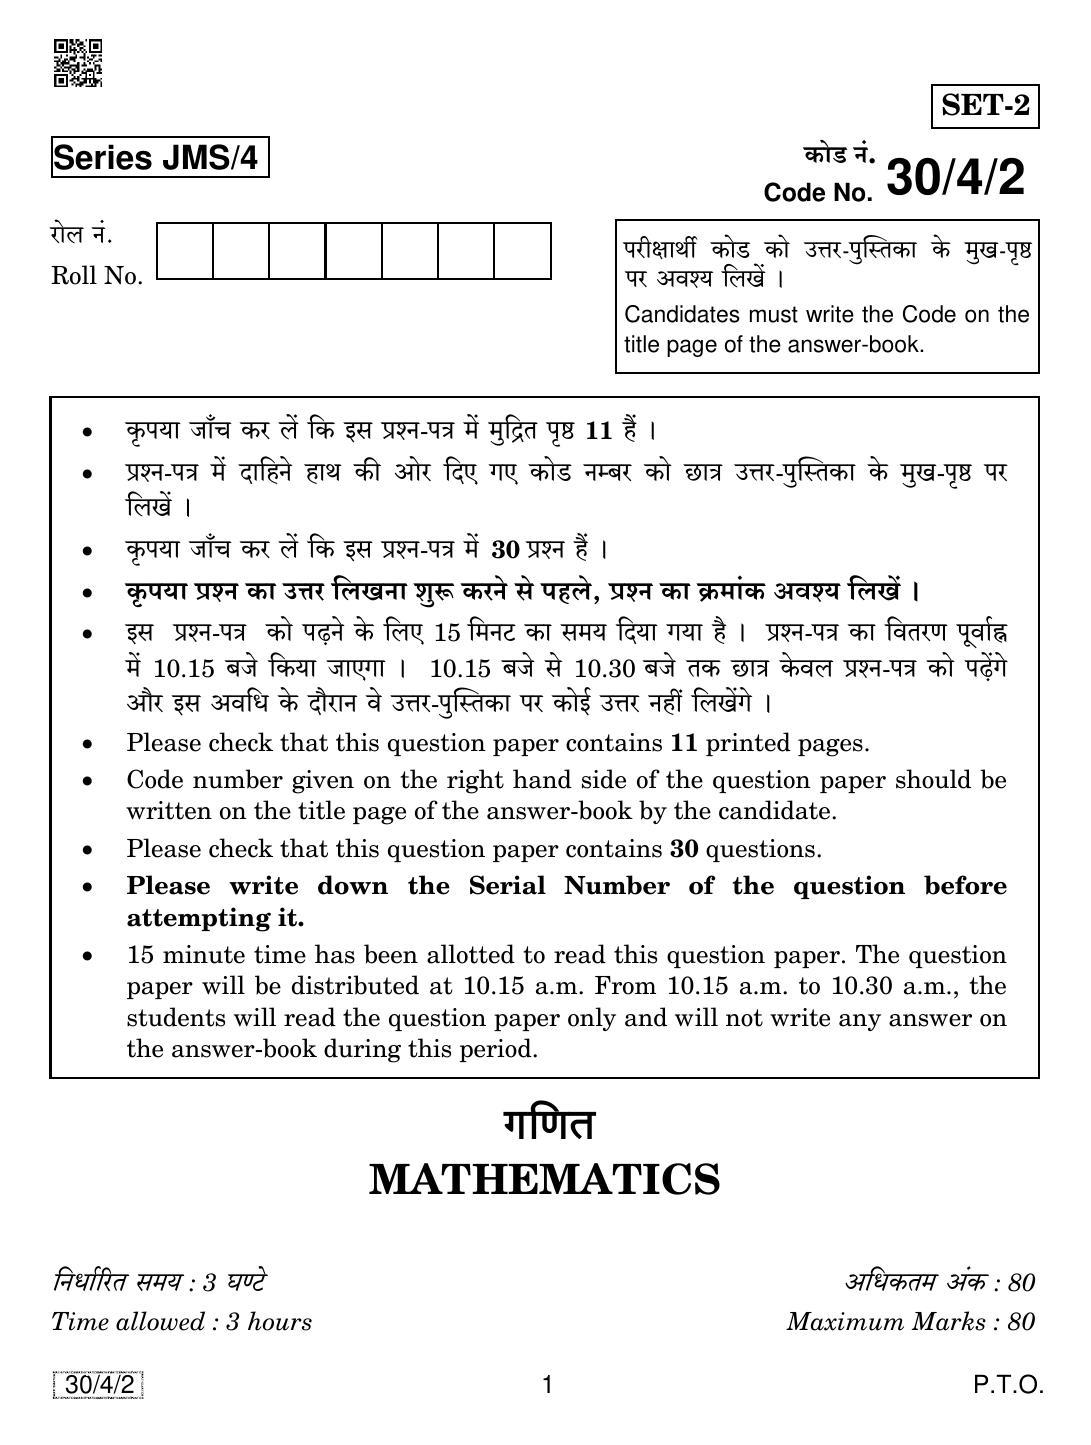 CBSE Class 10 Maths (30/4/2 - SET 2) 2019 Question Paper - Page 1